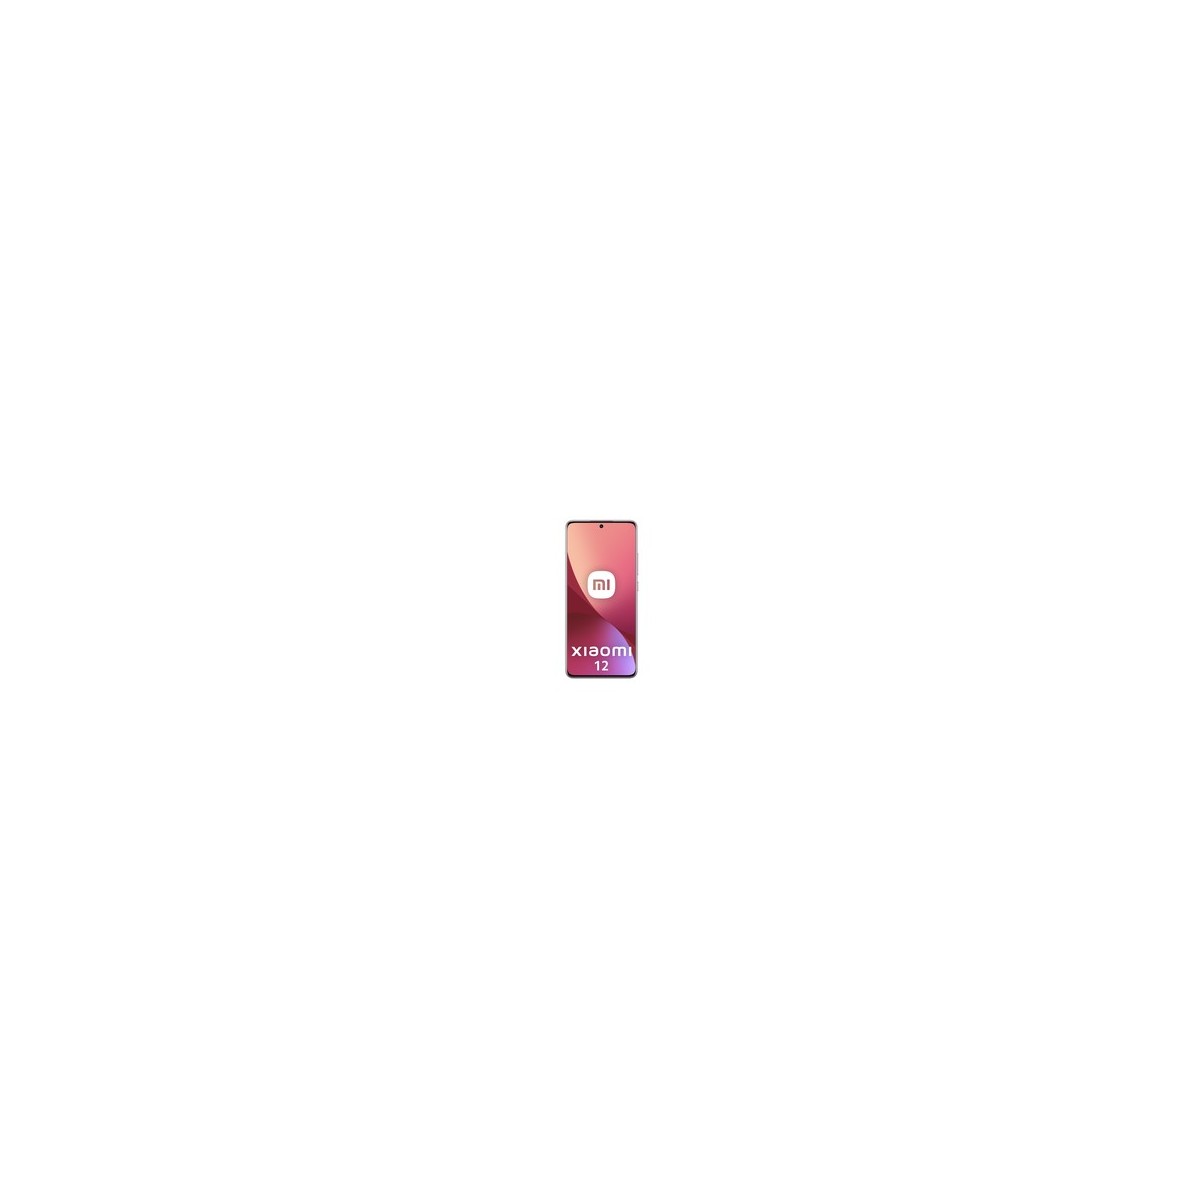 Xiaomi 12 - 15,9 cm (6.28 Zoll) - 8 GB - 256 GB - 50 MP - Android 12 - Violett